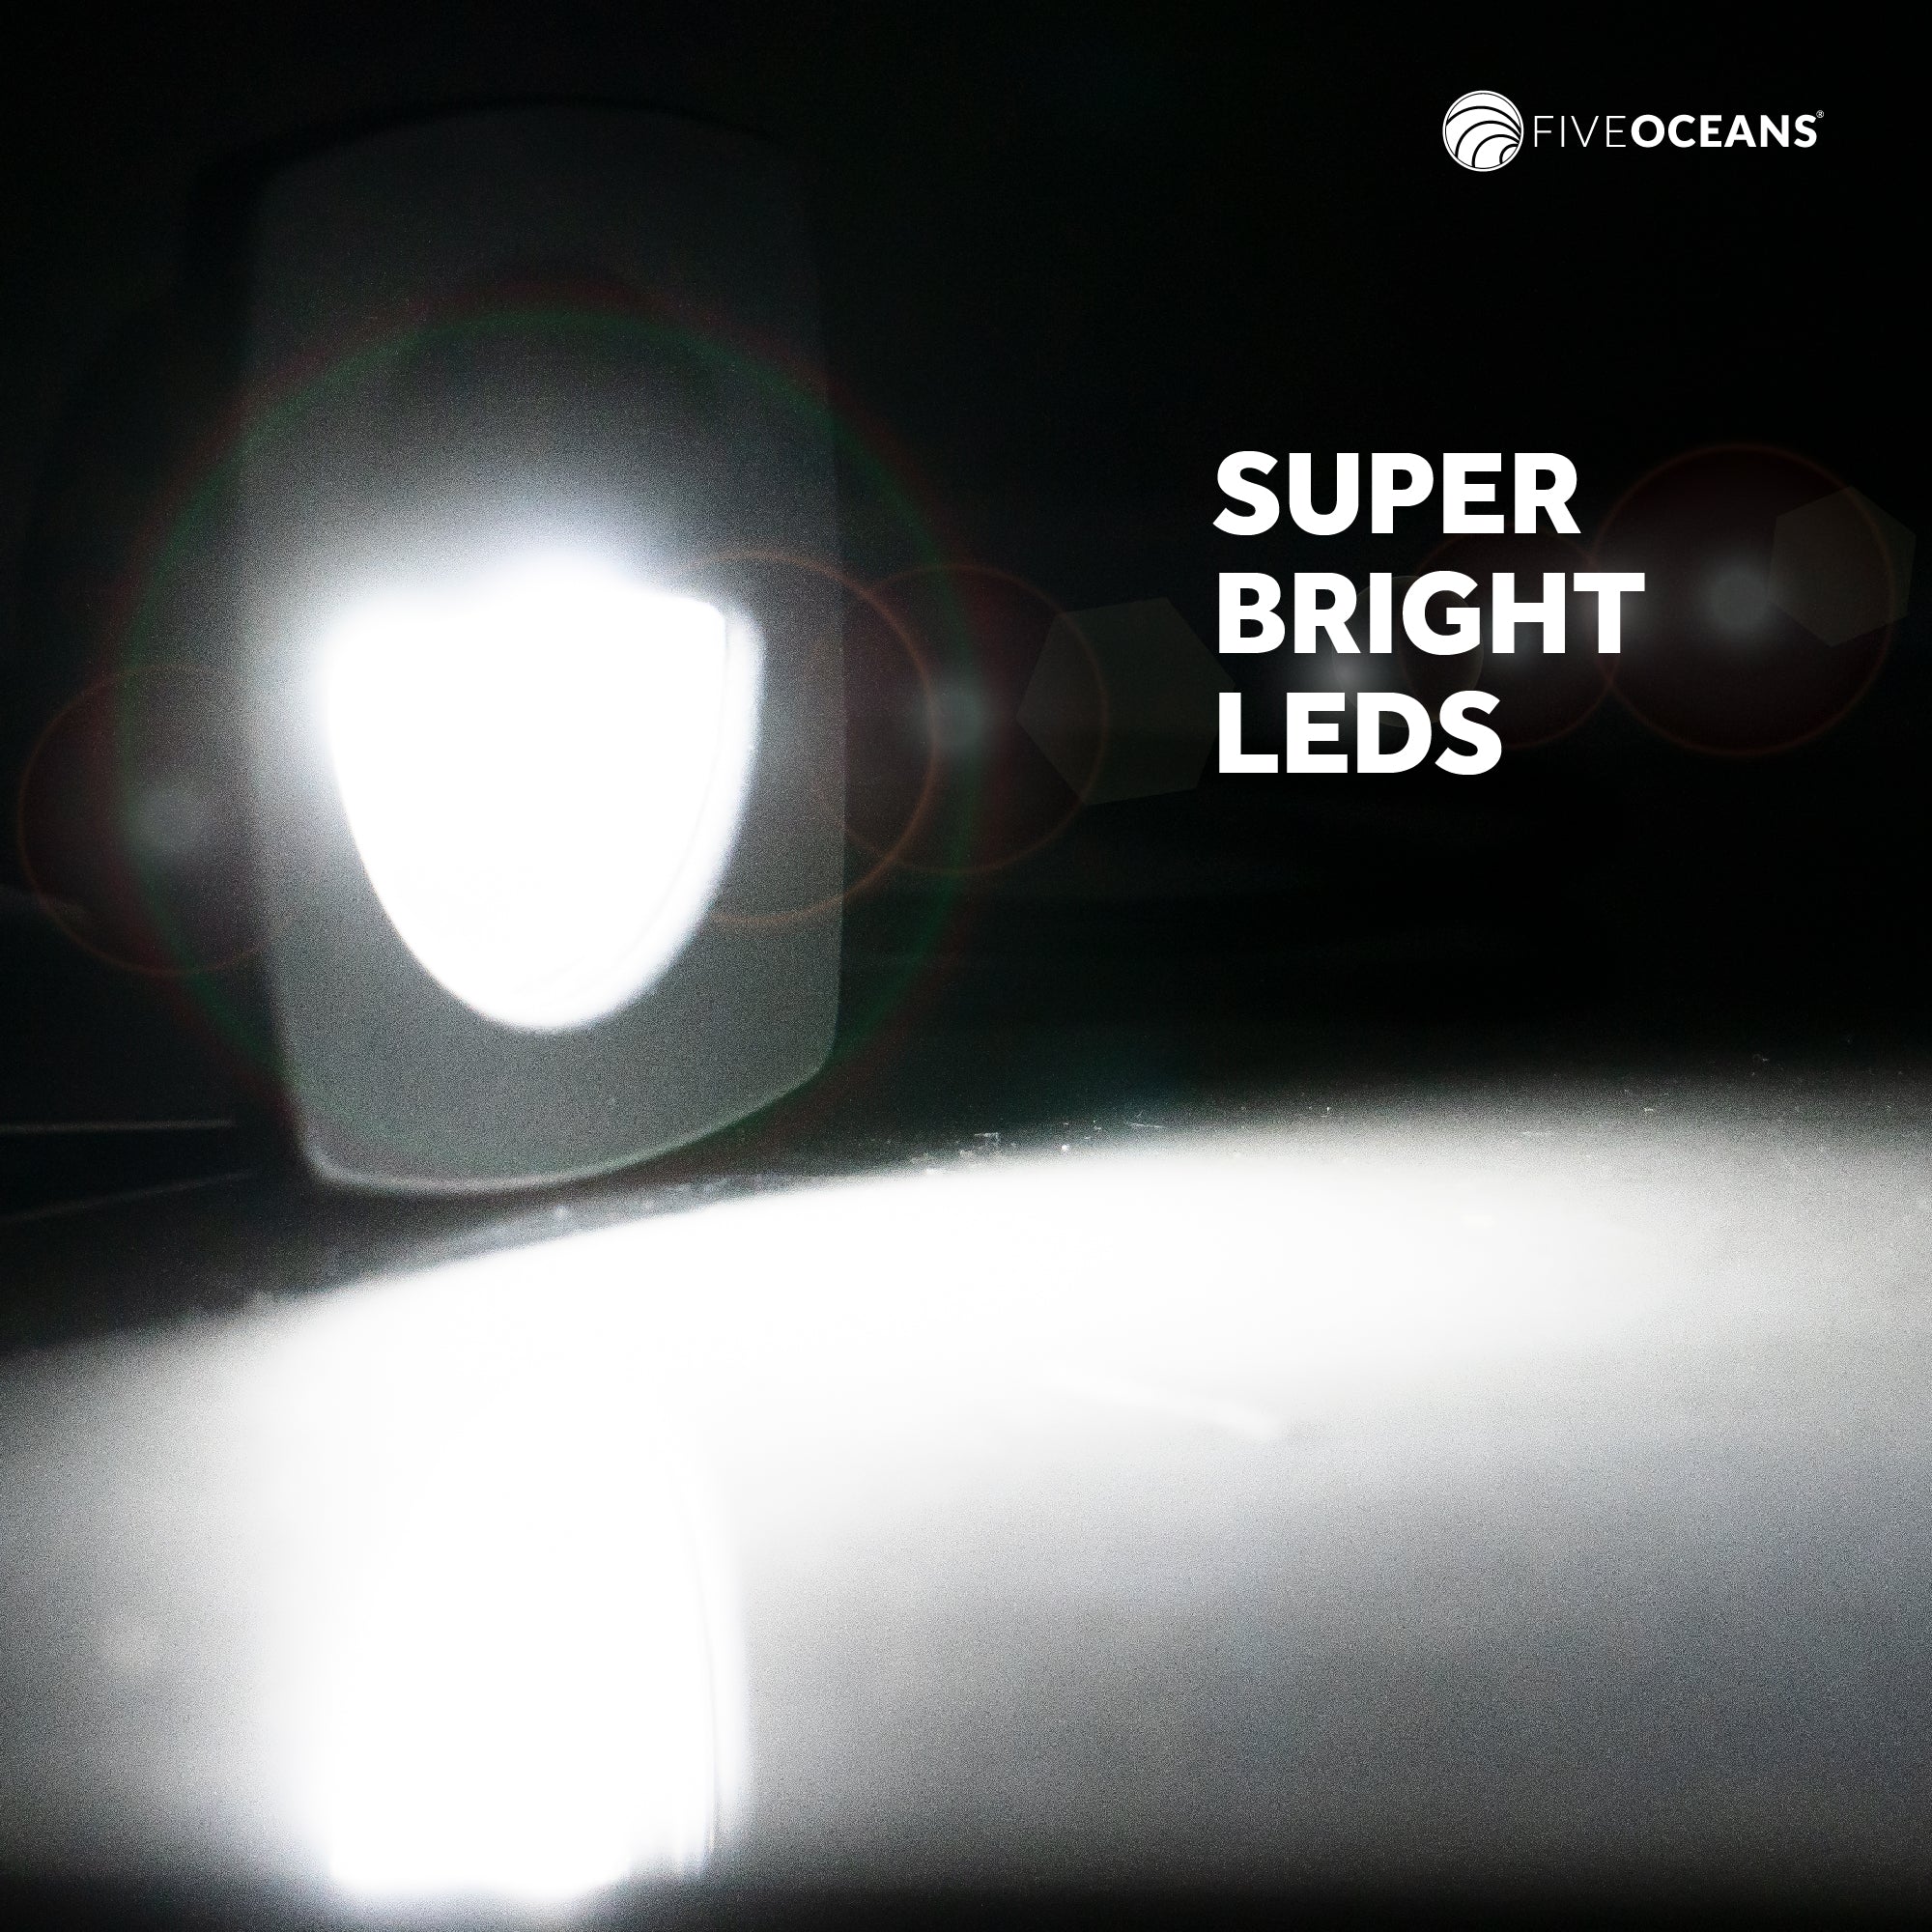 LED Courtesy Companion Way Light, Black Square, Cool White, 2-Pack - FO2313-M2